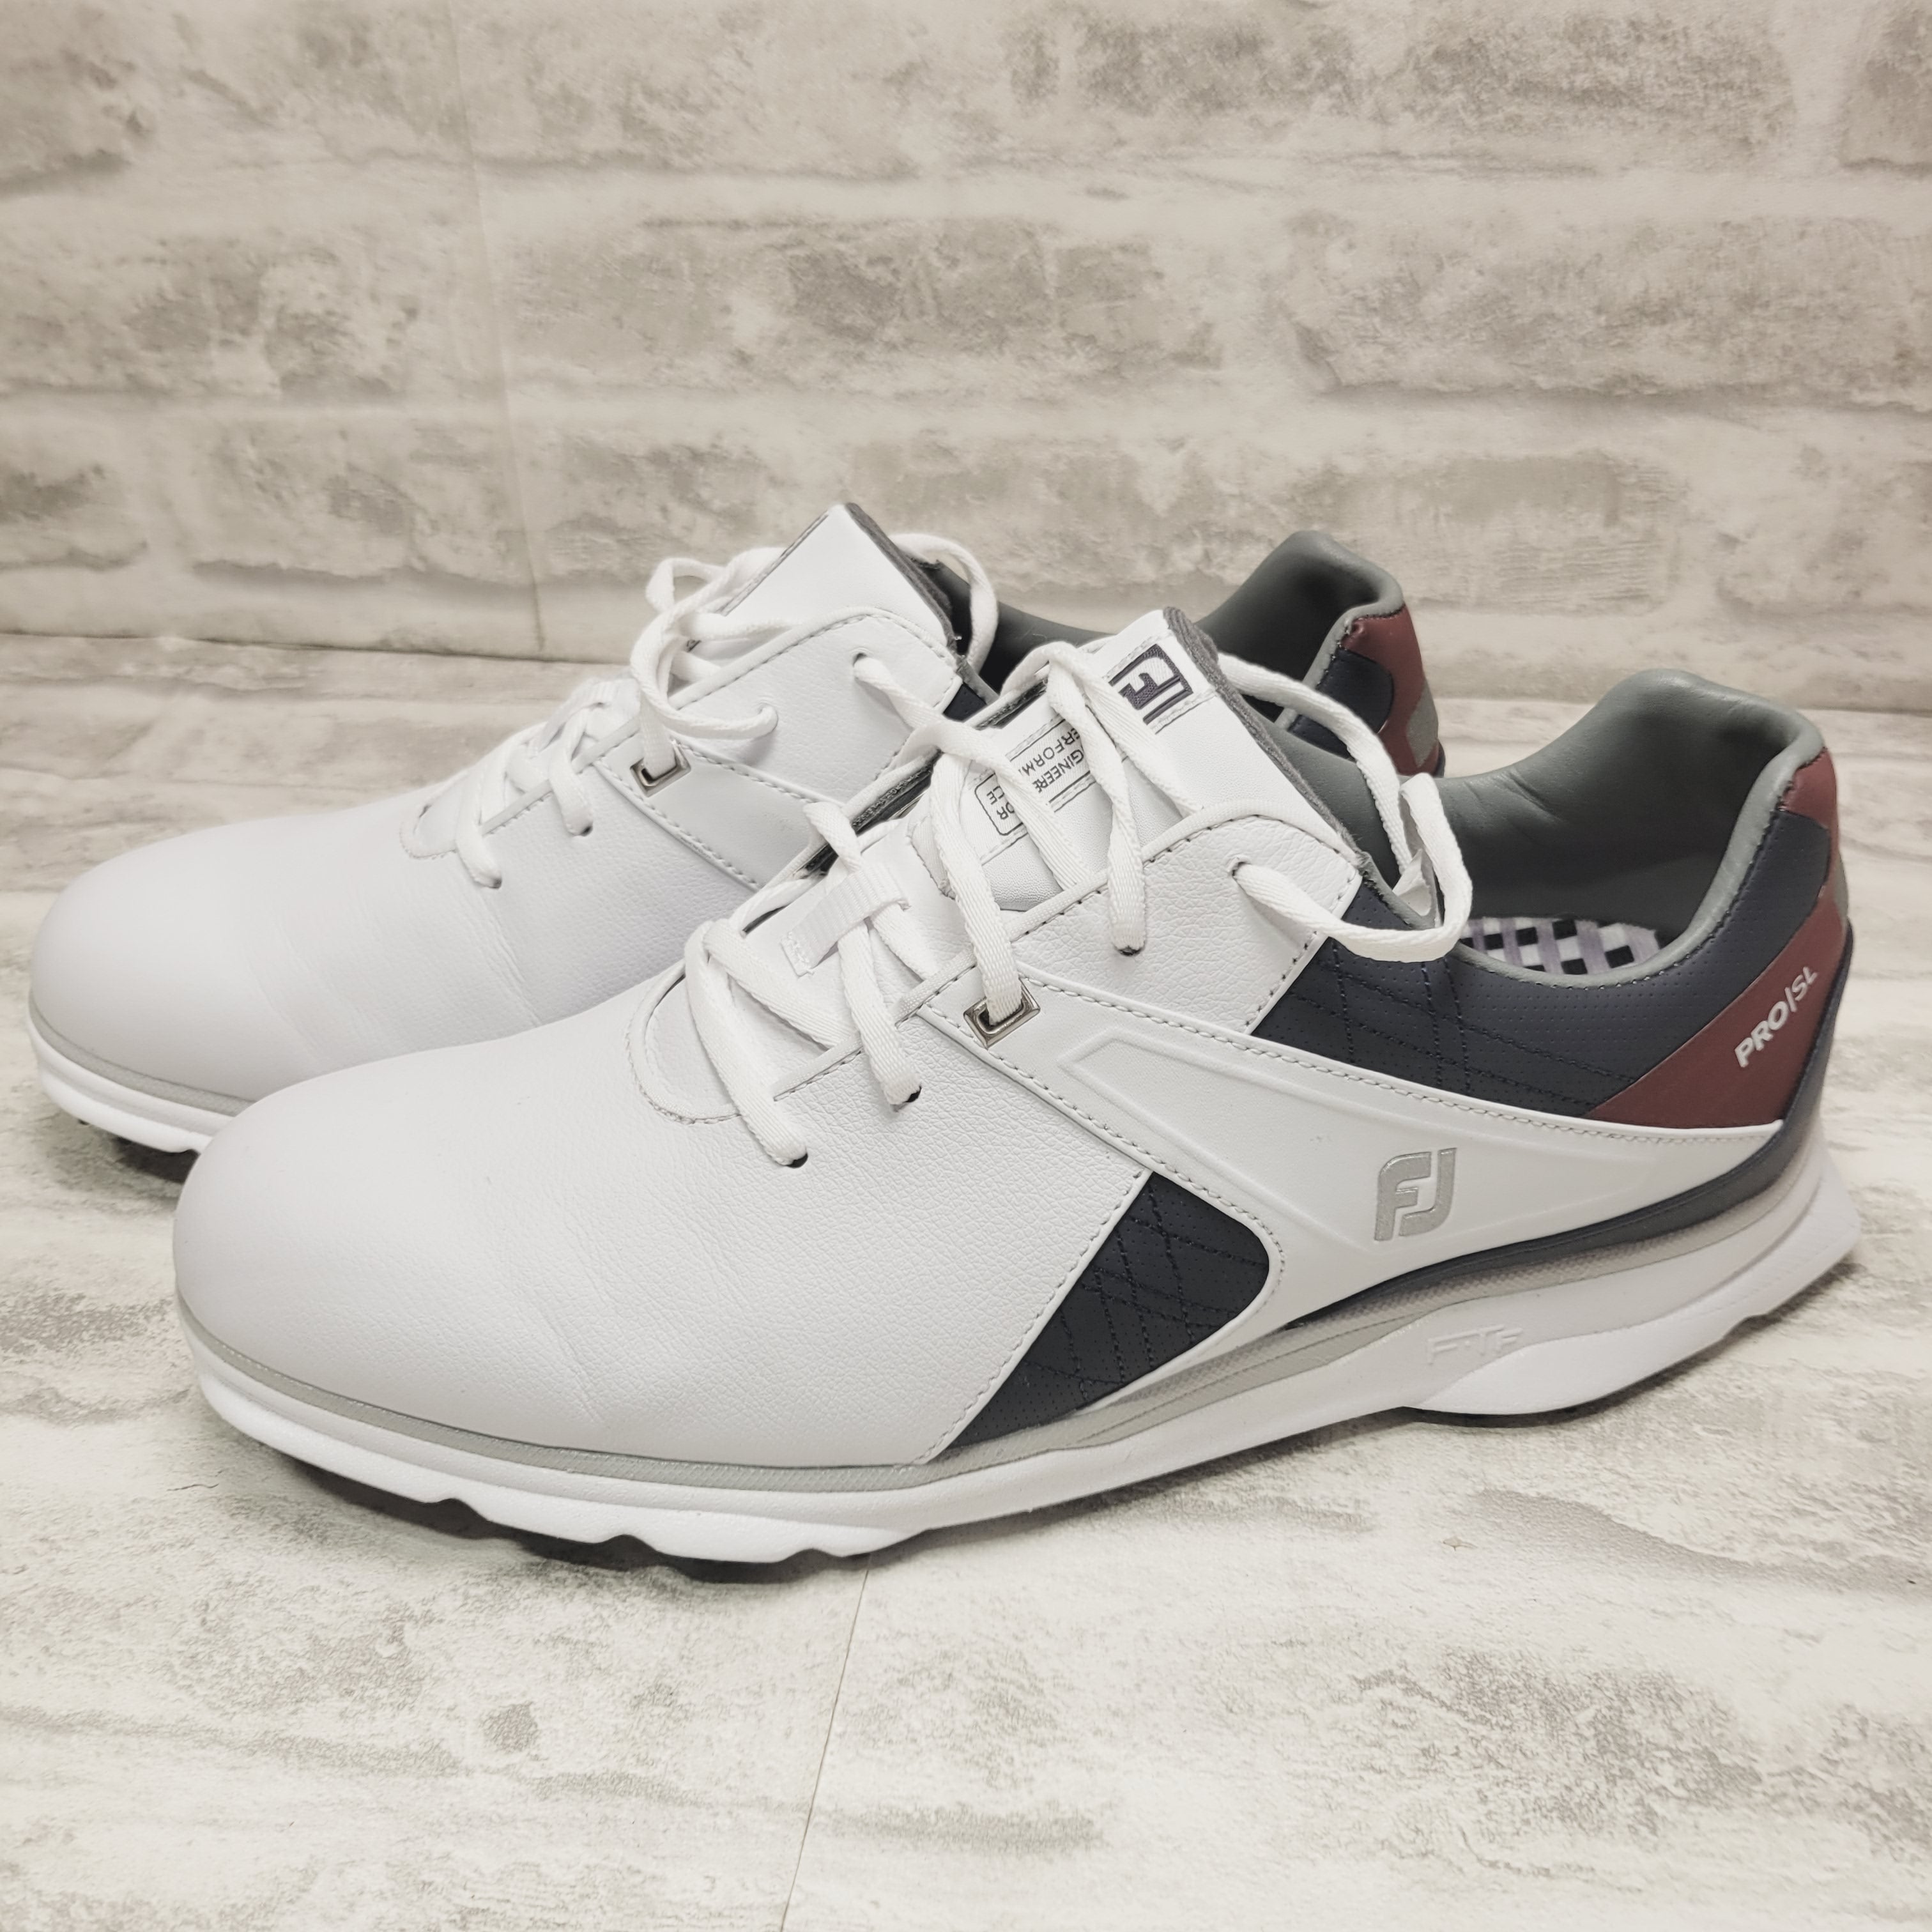 FootJoy Men's Pro/Sl Golf Shoes (11.5, White/Navy/Maroon) (7776219857134)